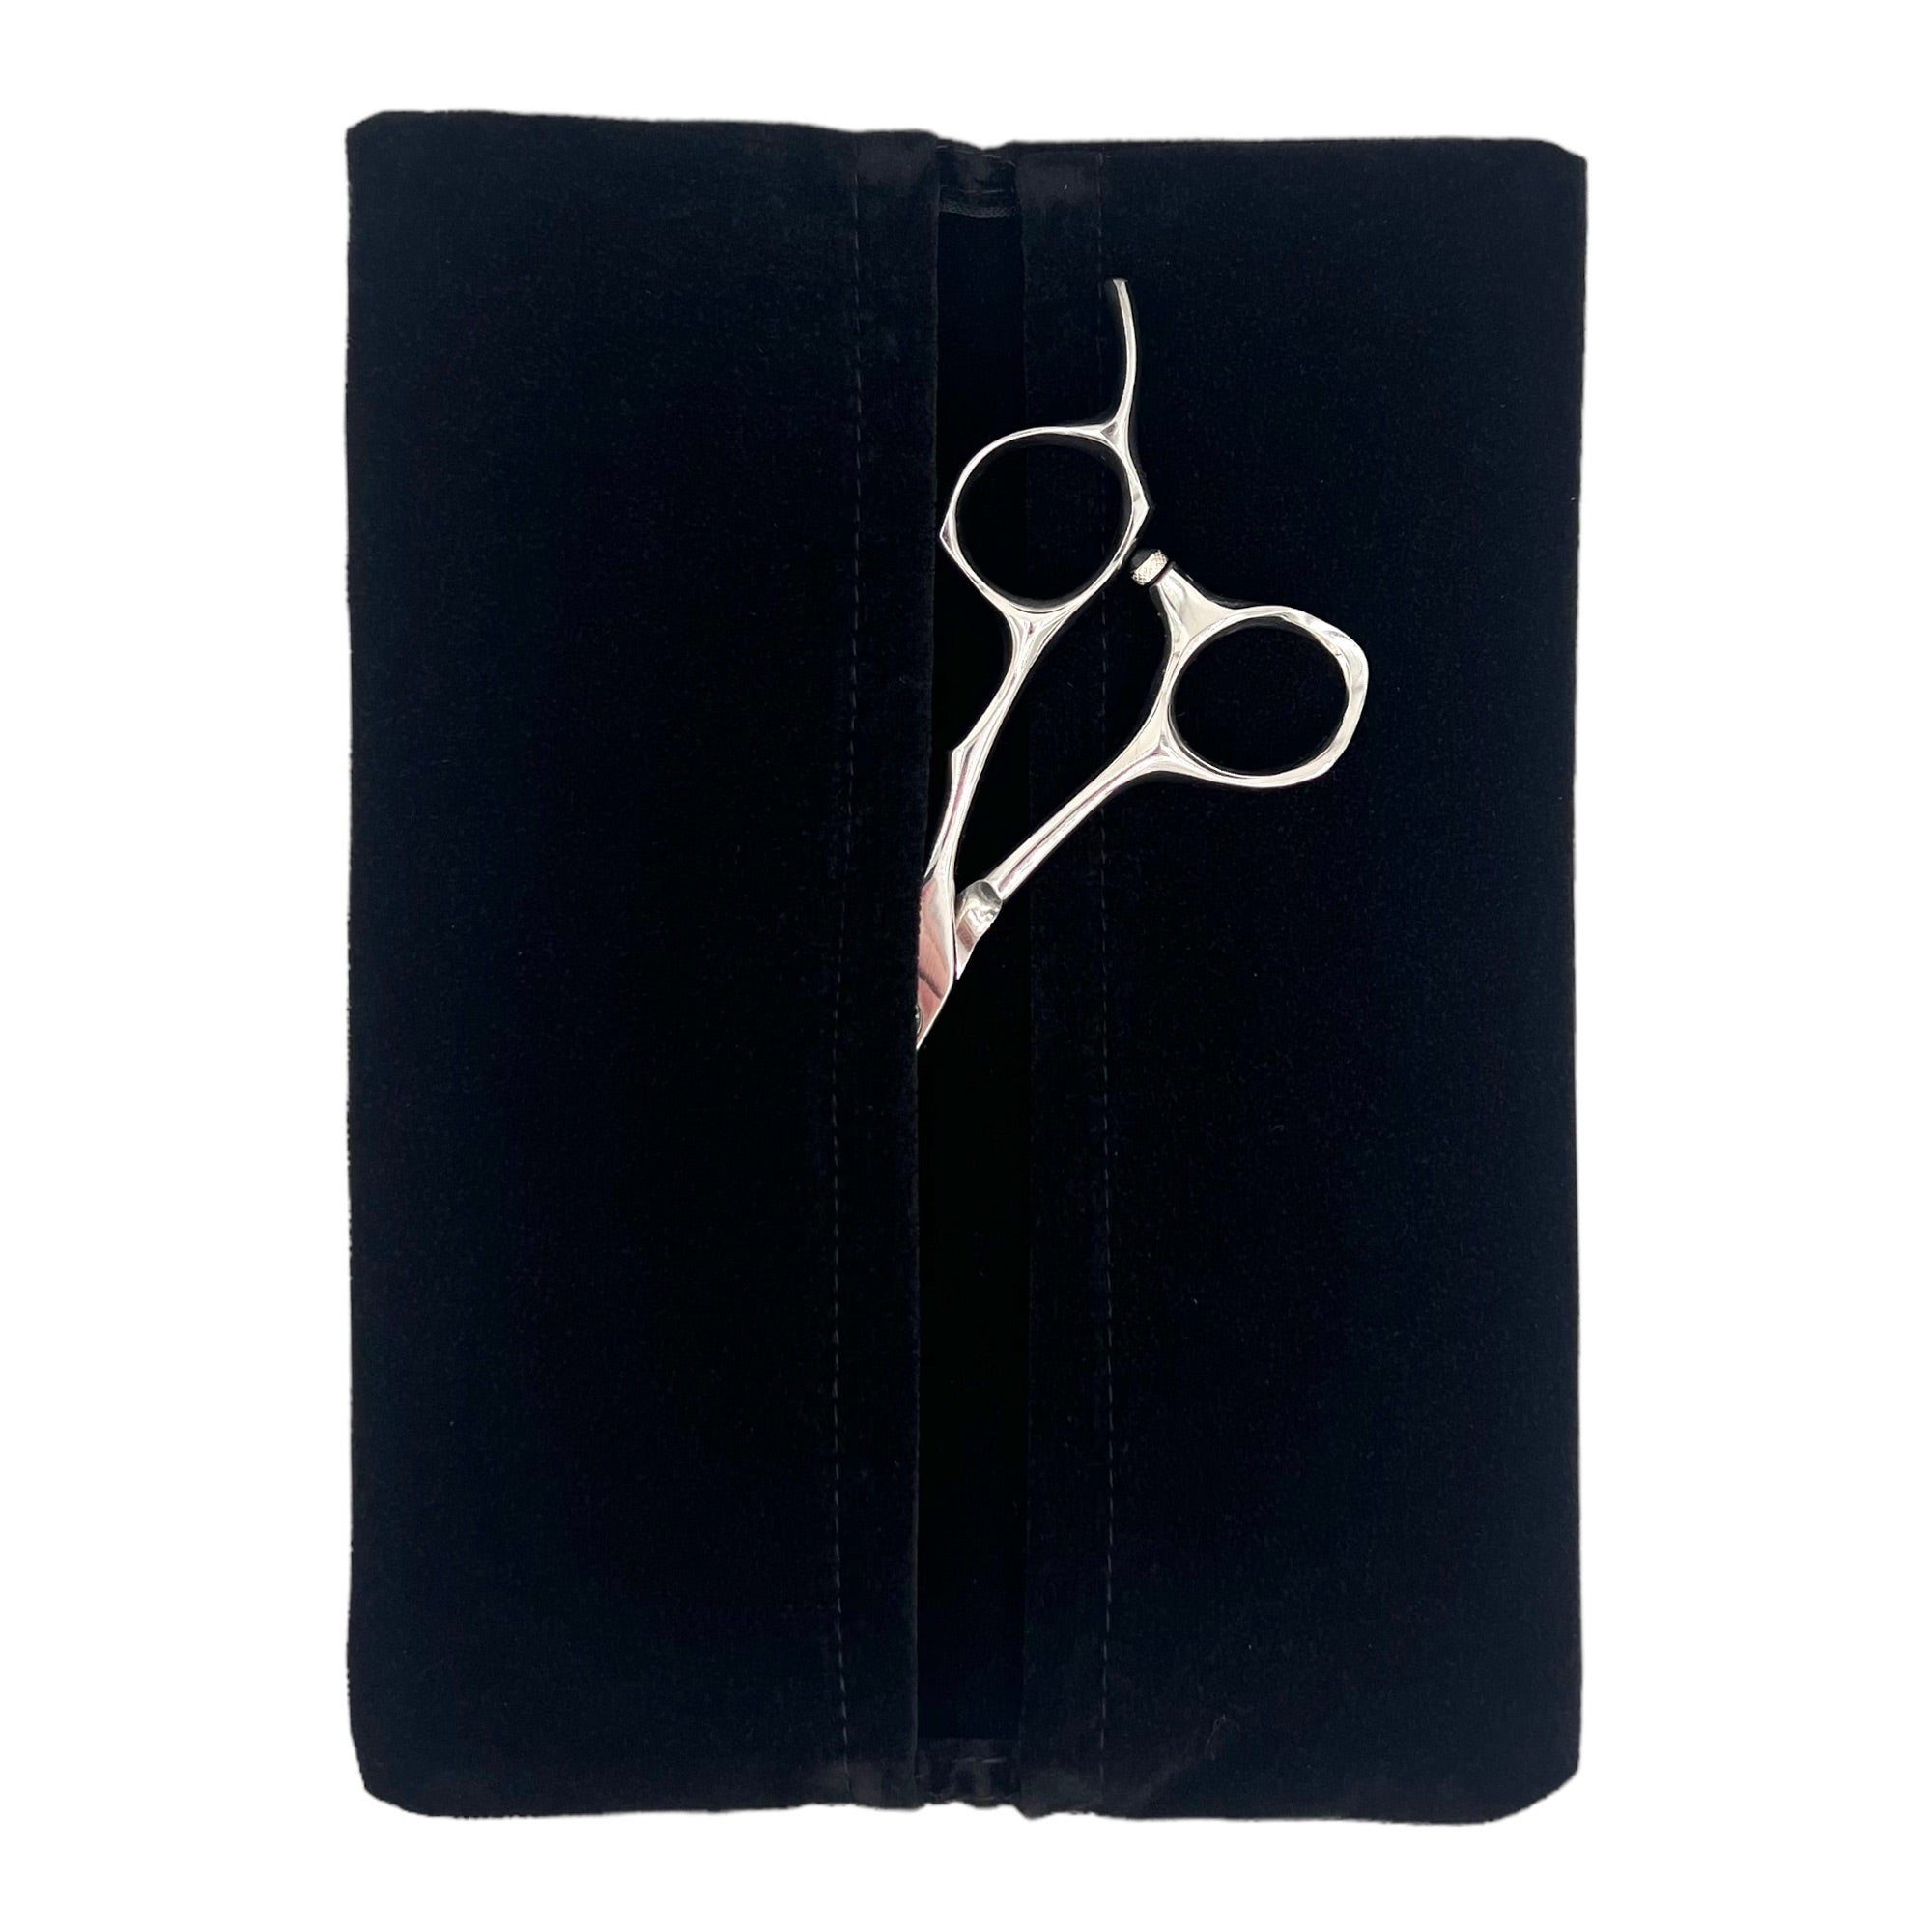 Kiepe - 2810 Hairdressing Scissors Series Razor Wire 5.5 Inch (14cm)